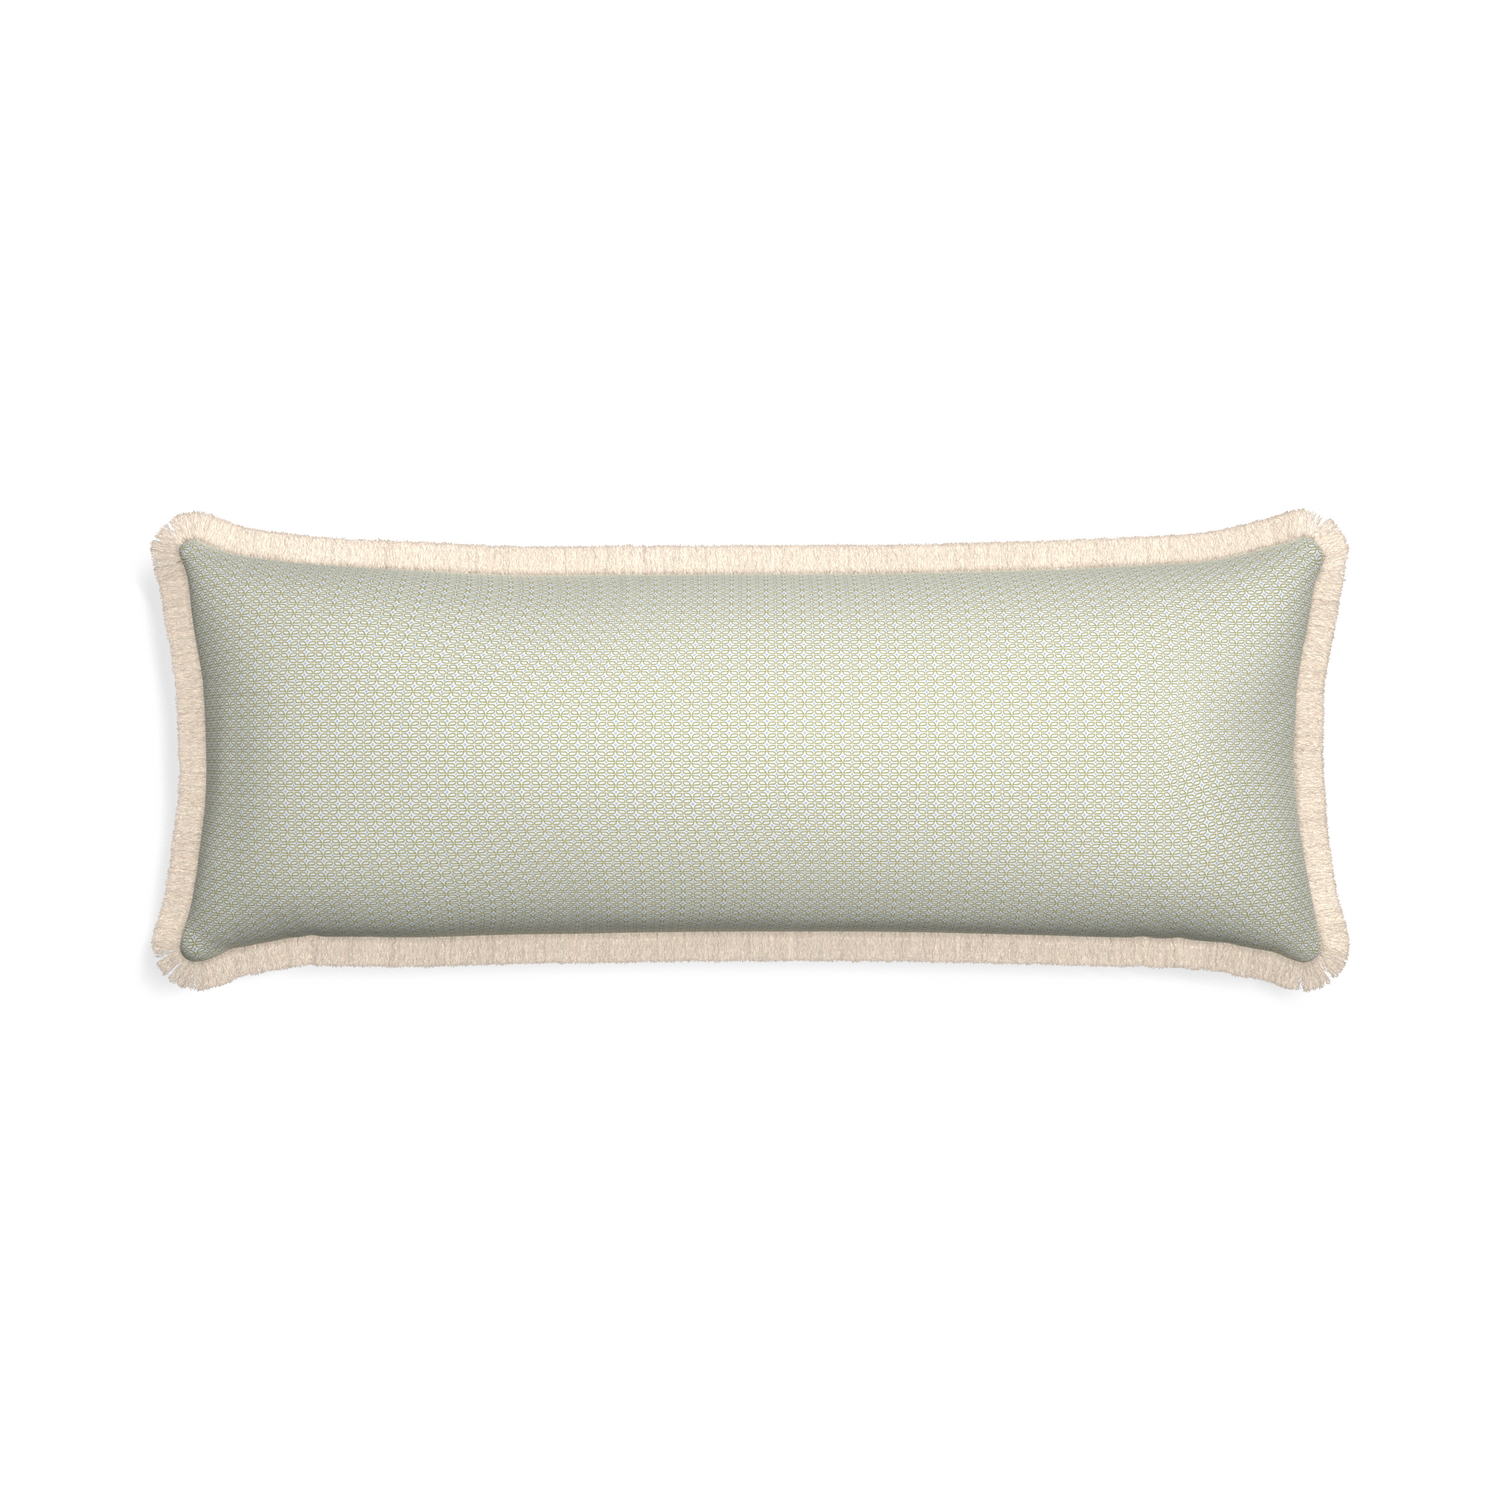 Xl-lumbar loomi moss custom pillow with cream fringe on white background